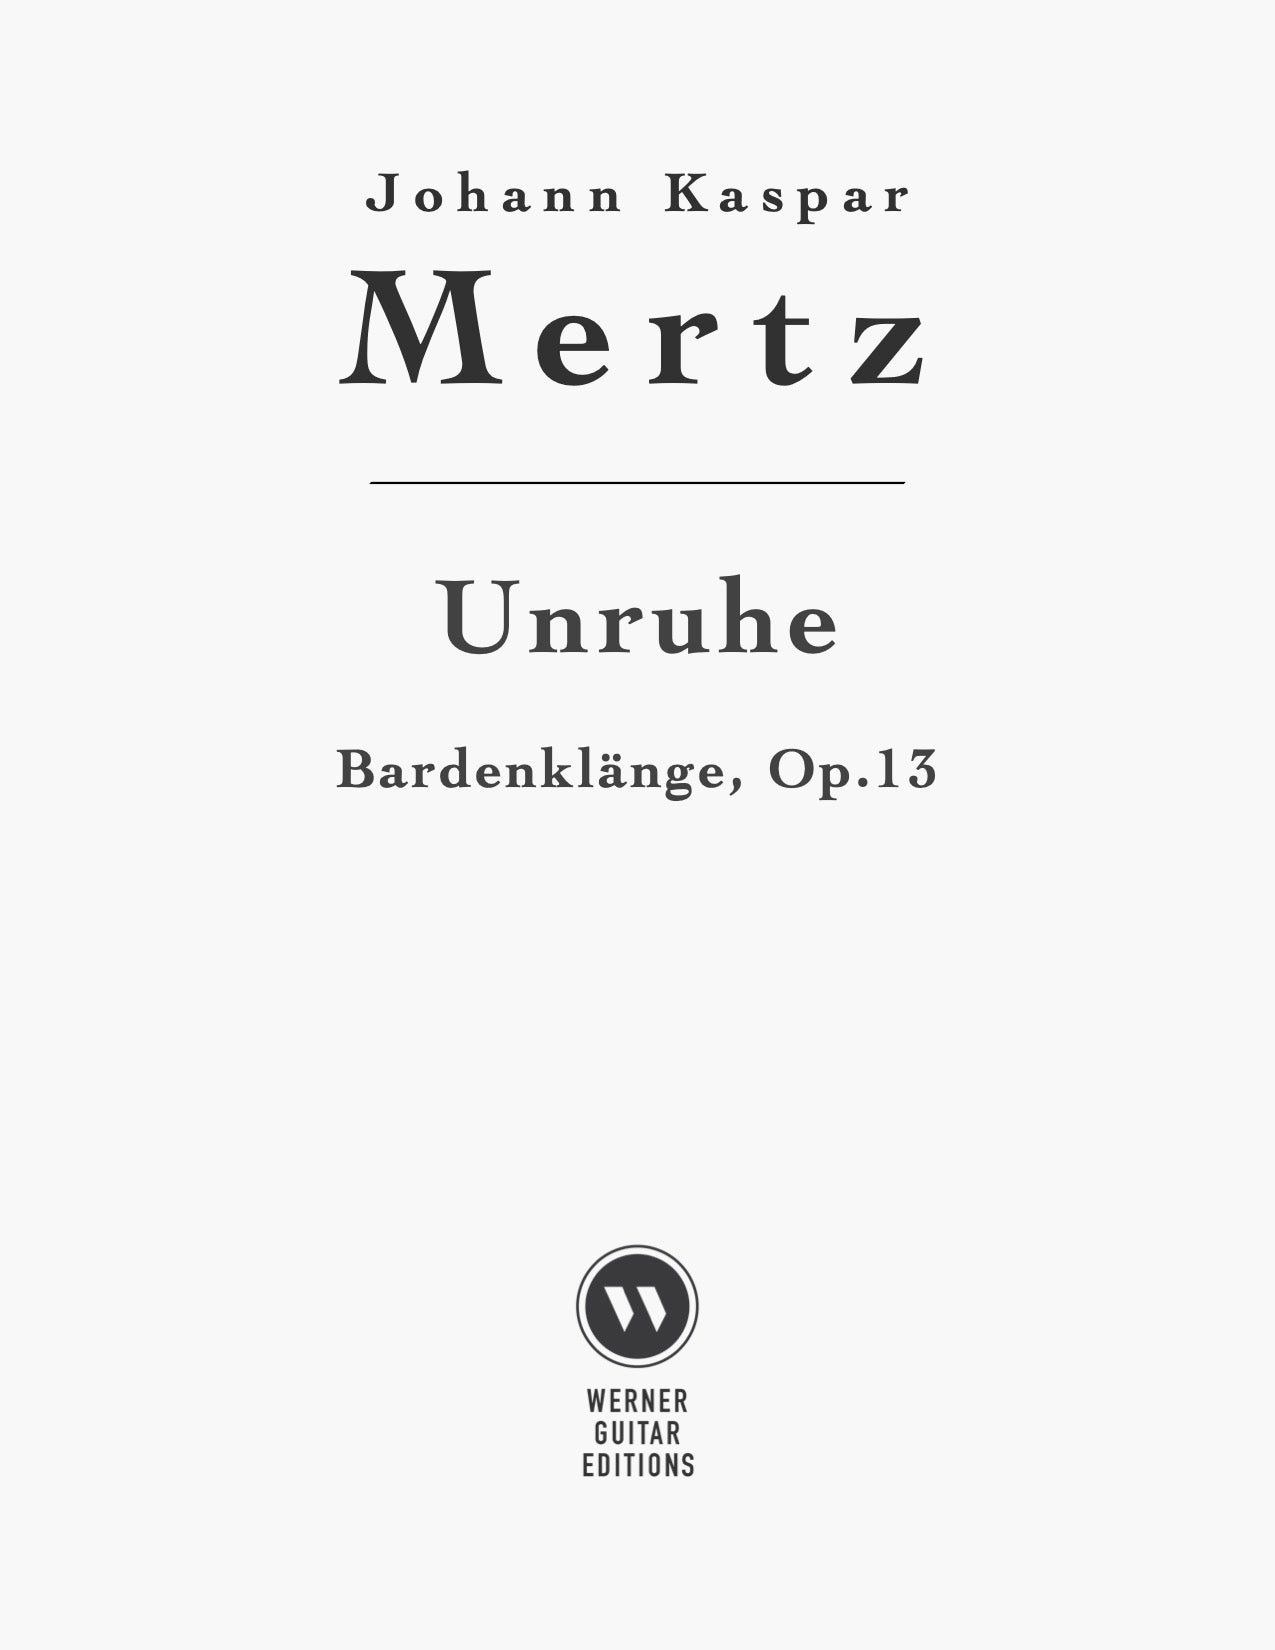 Unruhe by Mertz (PDF Sheet Music or Tab)